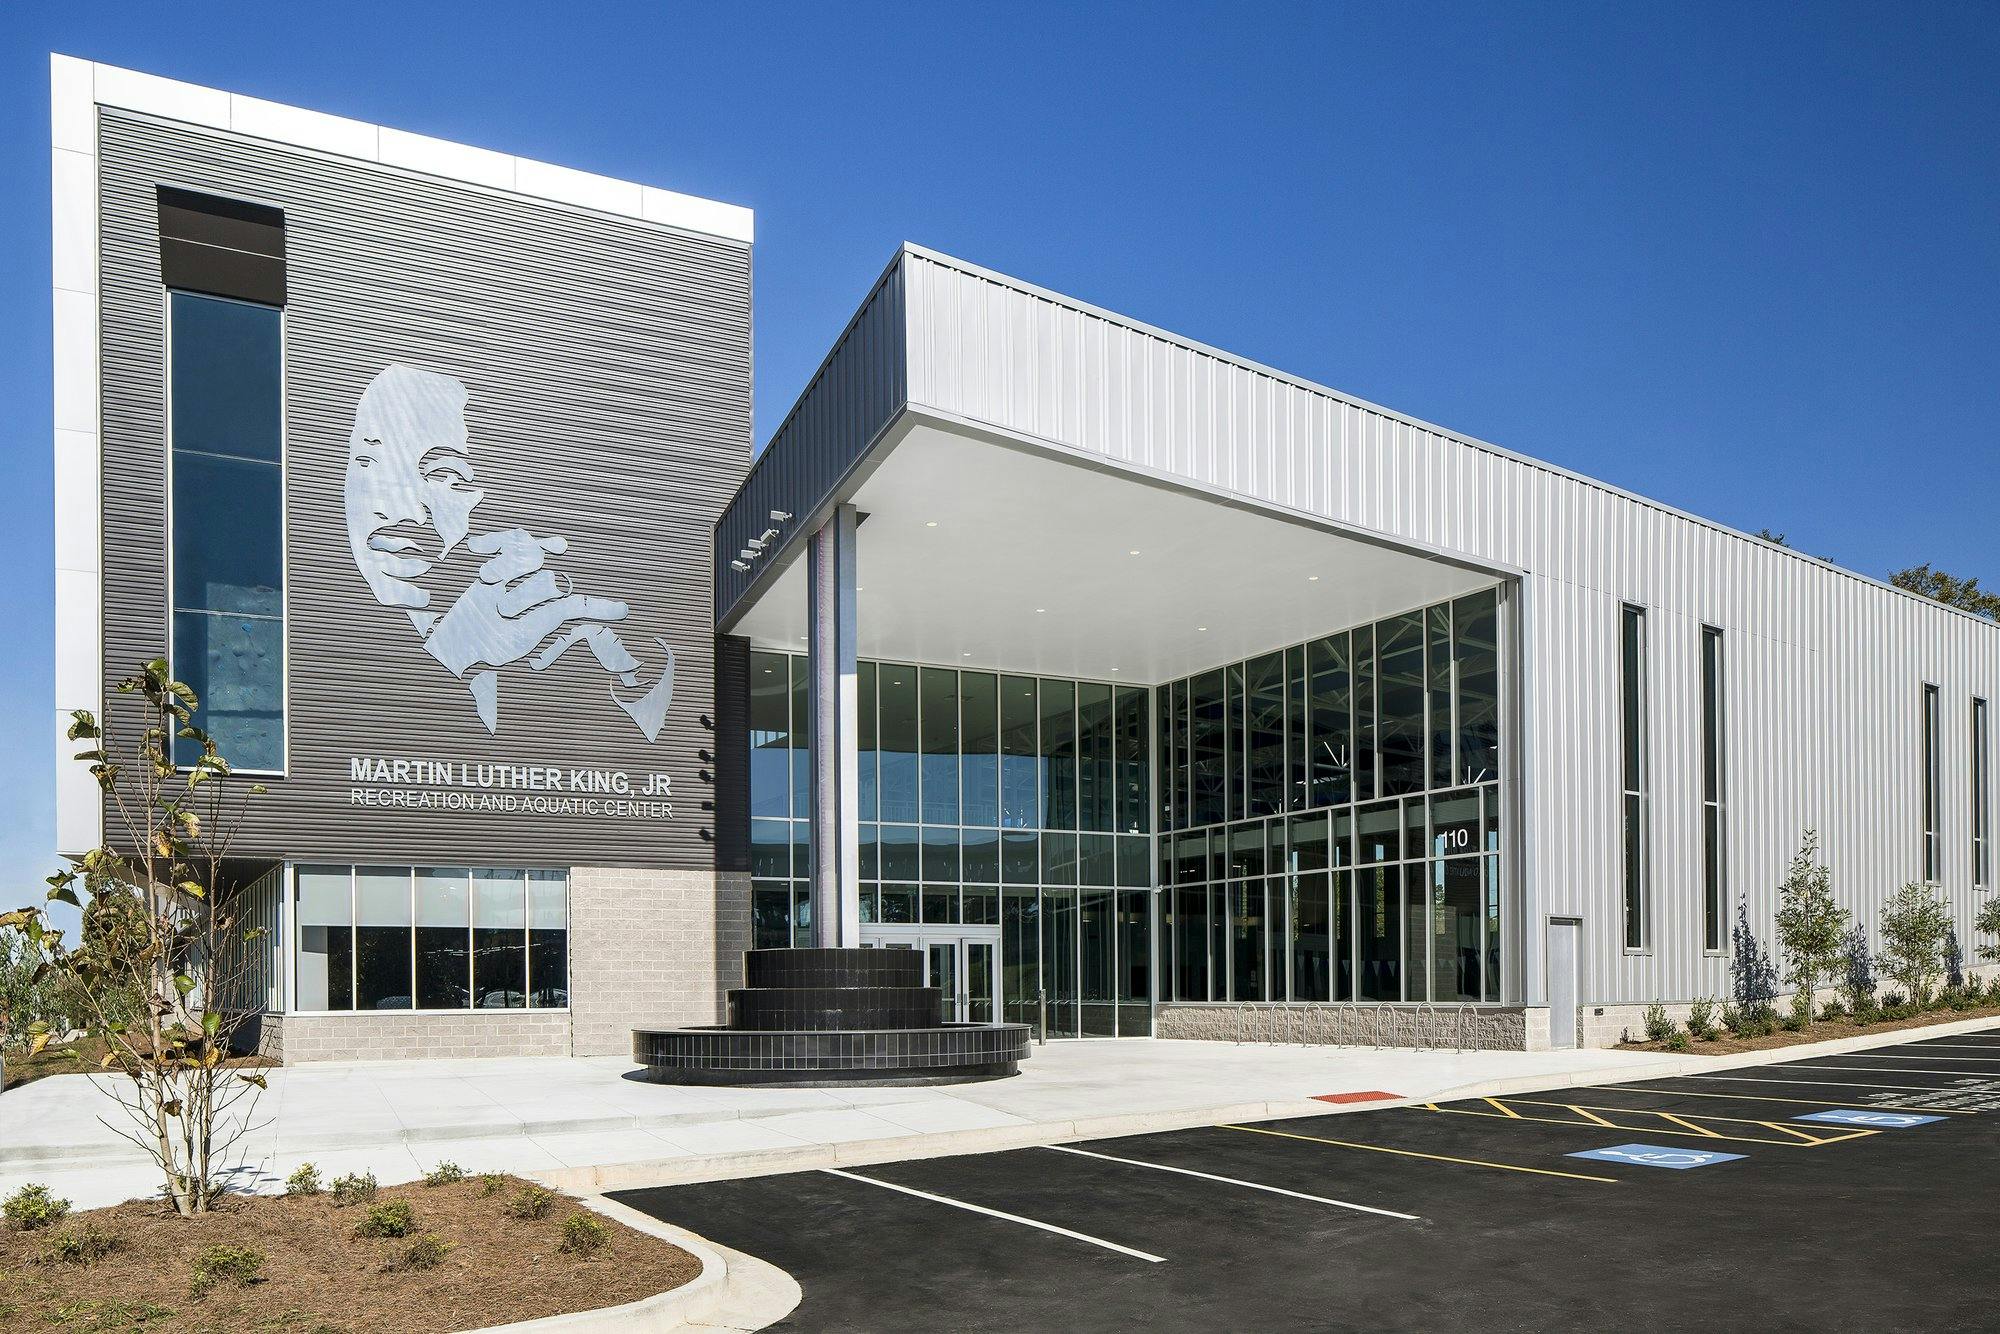 MLK Recreation Center